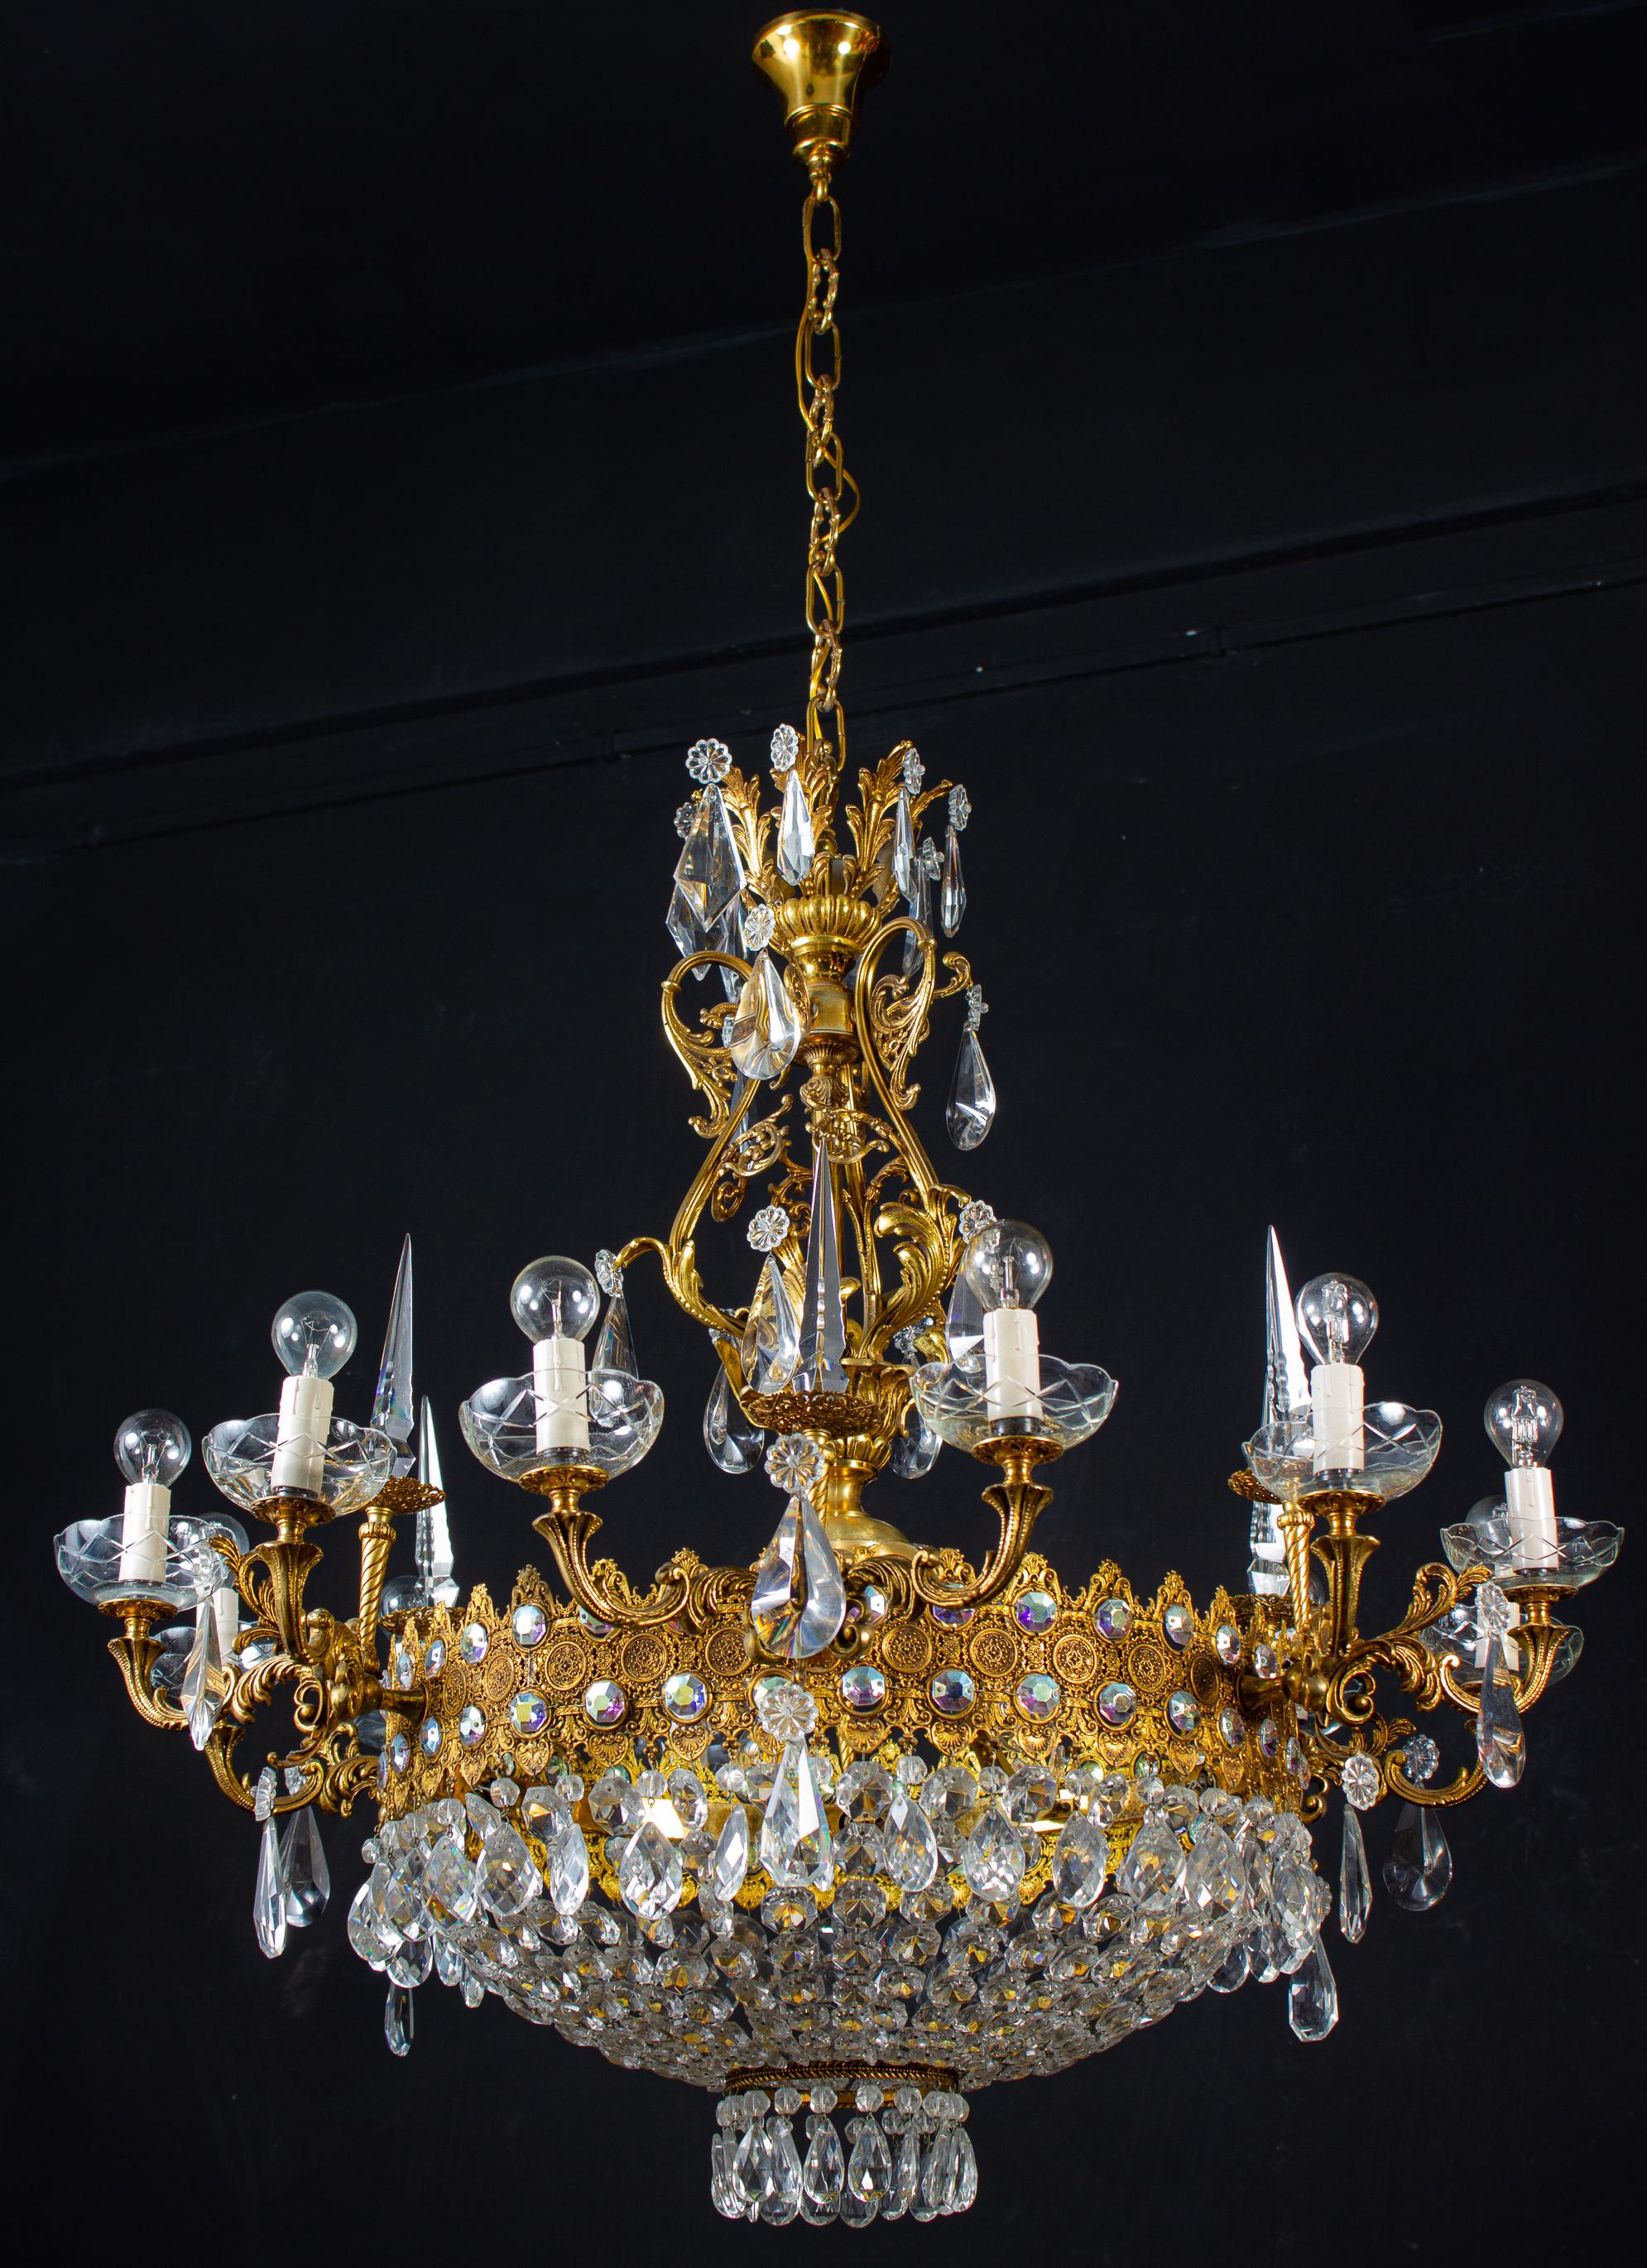 luxurious chandeliers